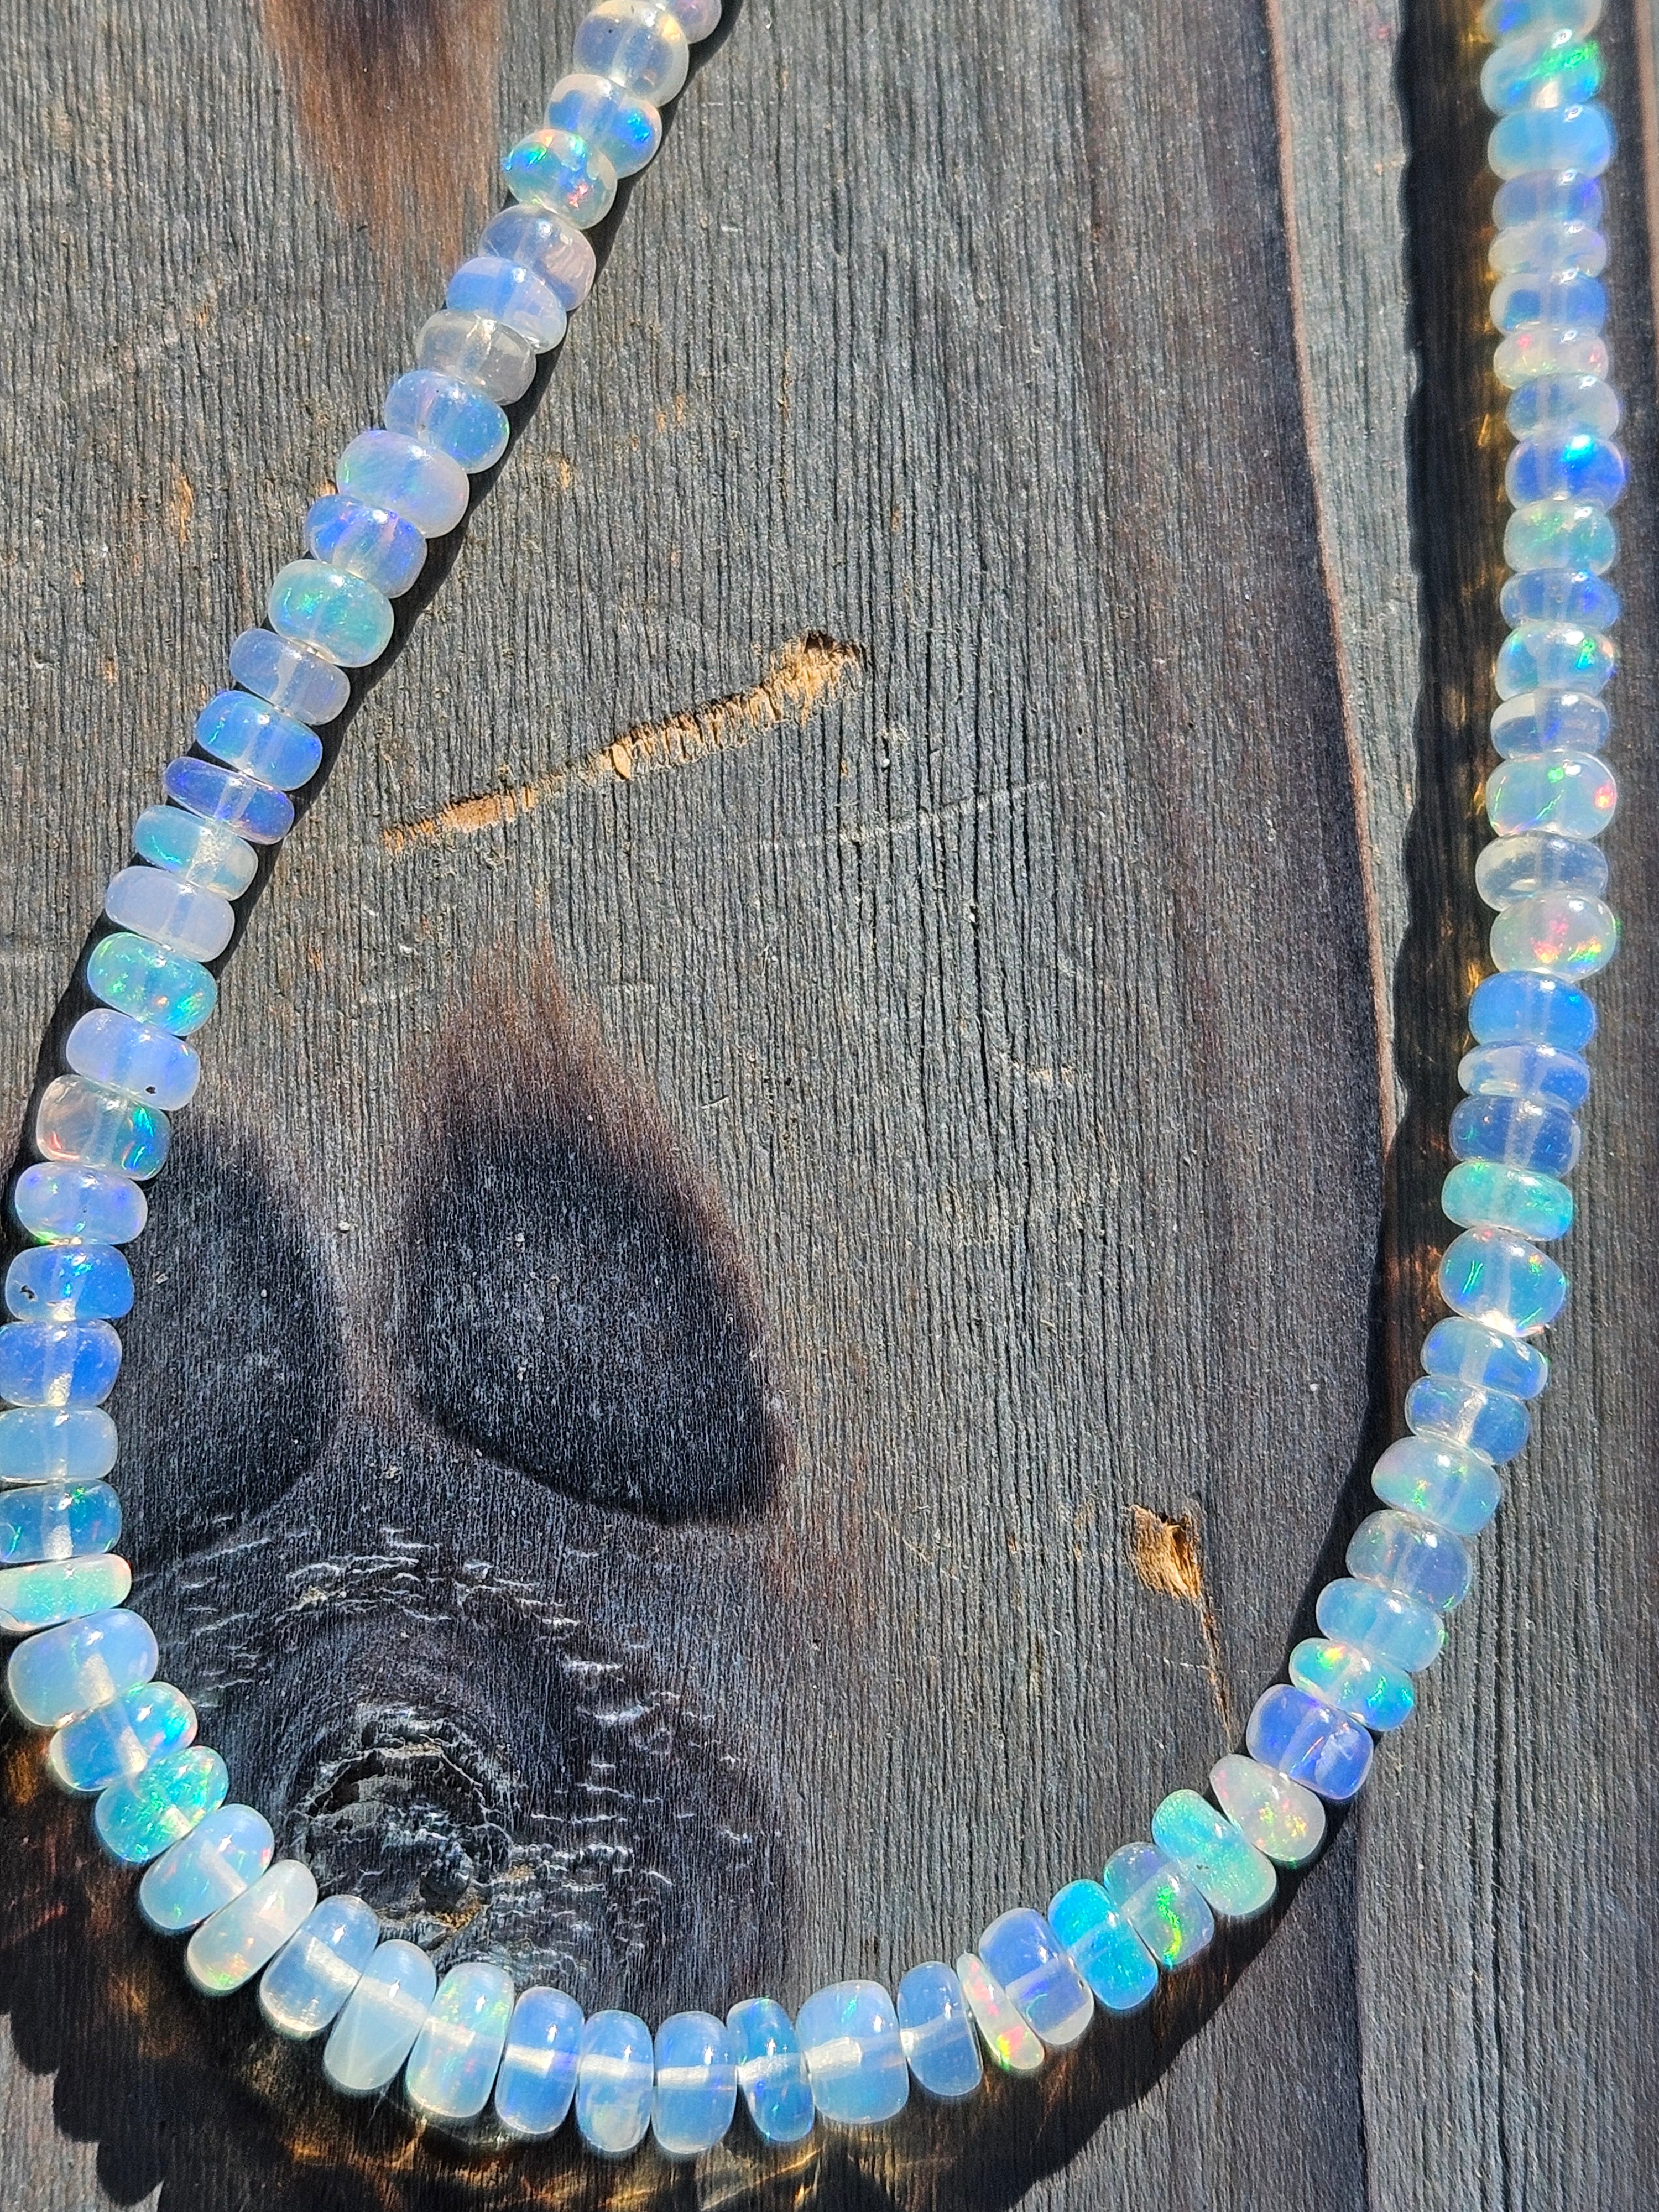 My 6.5ct Ethiopian Opal necklace. : r/Gemstones